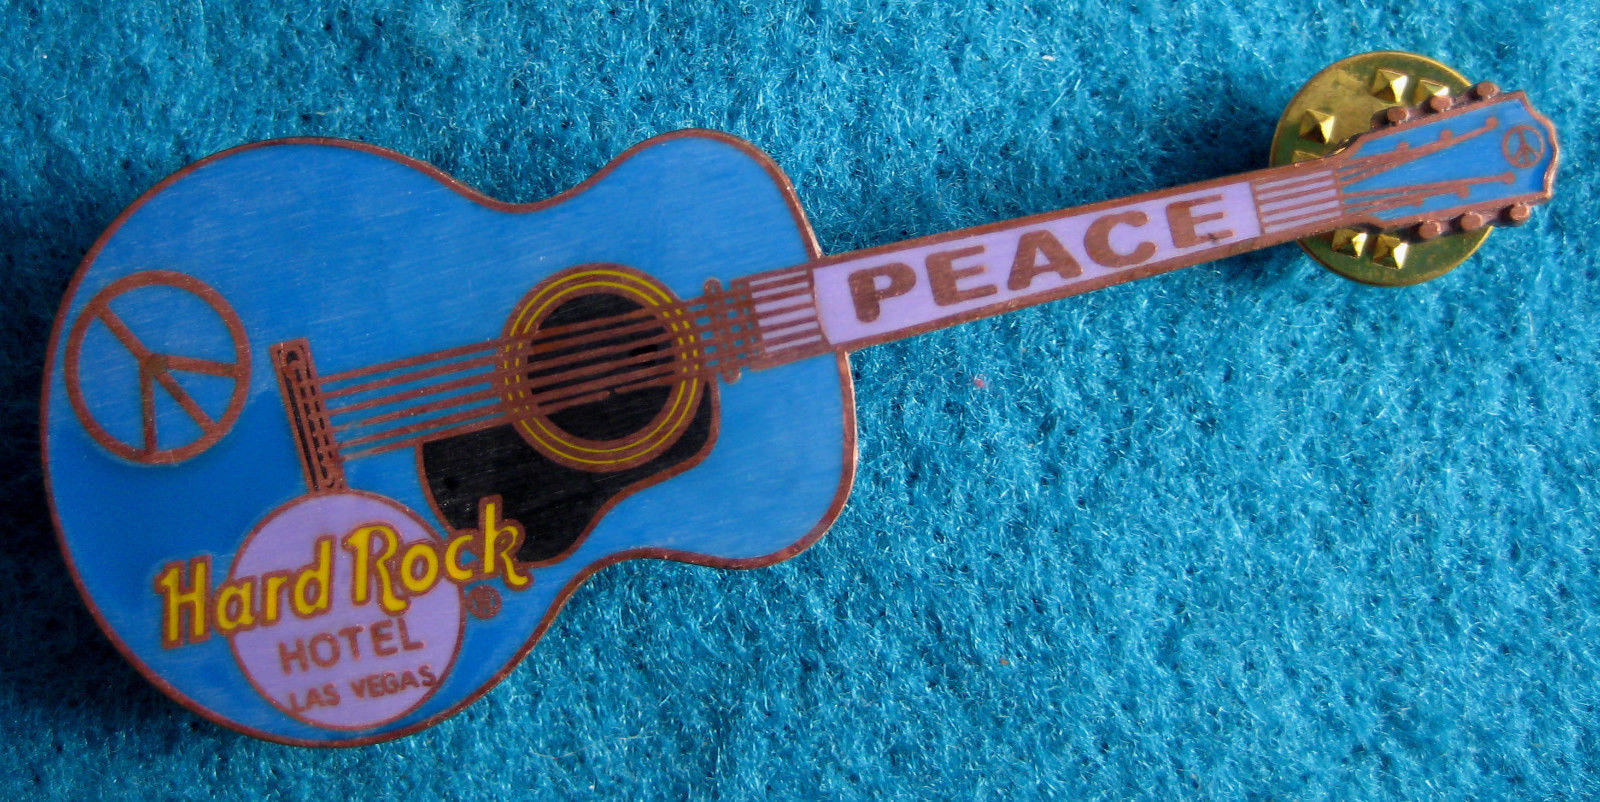 LAS VEGAS HOTEL PROTOTYPE *BLUE MATT* PEACE GIBSON GUITAR Hard Rock Cafe PIN